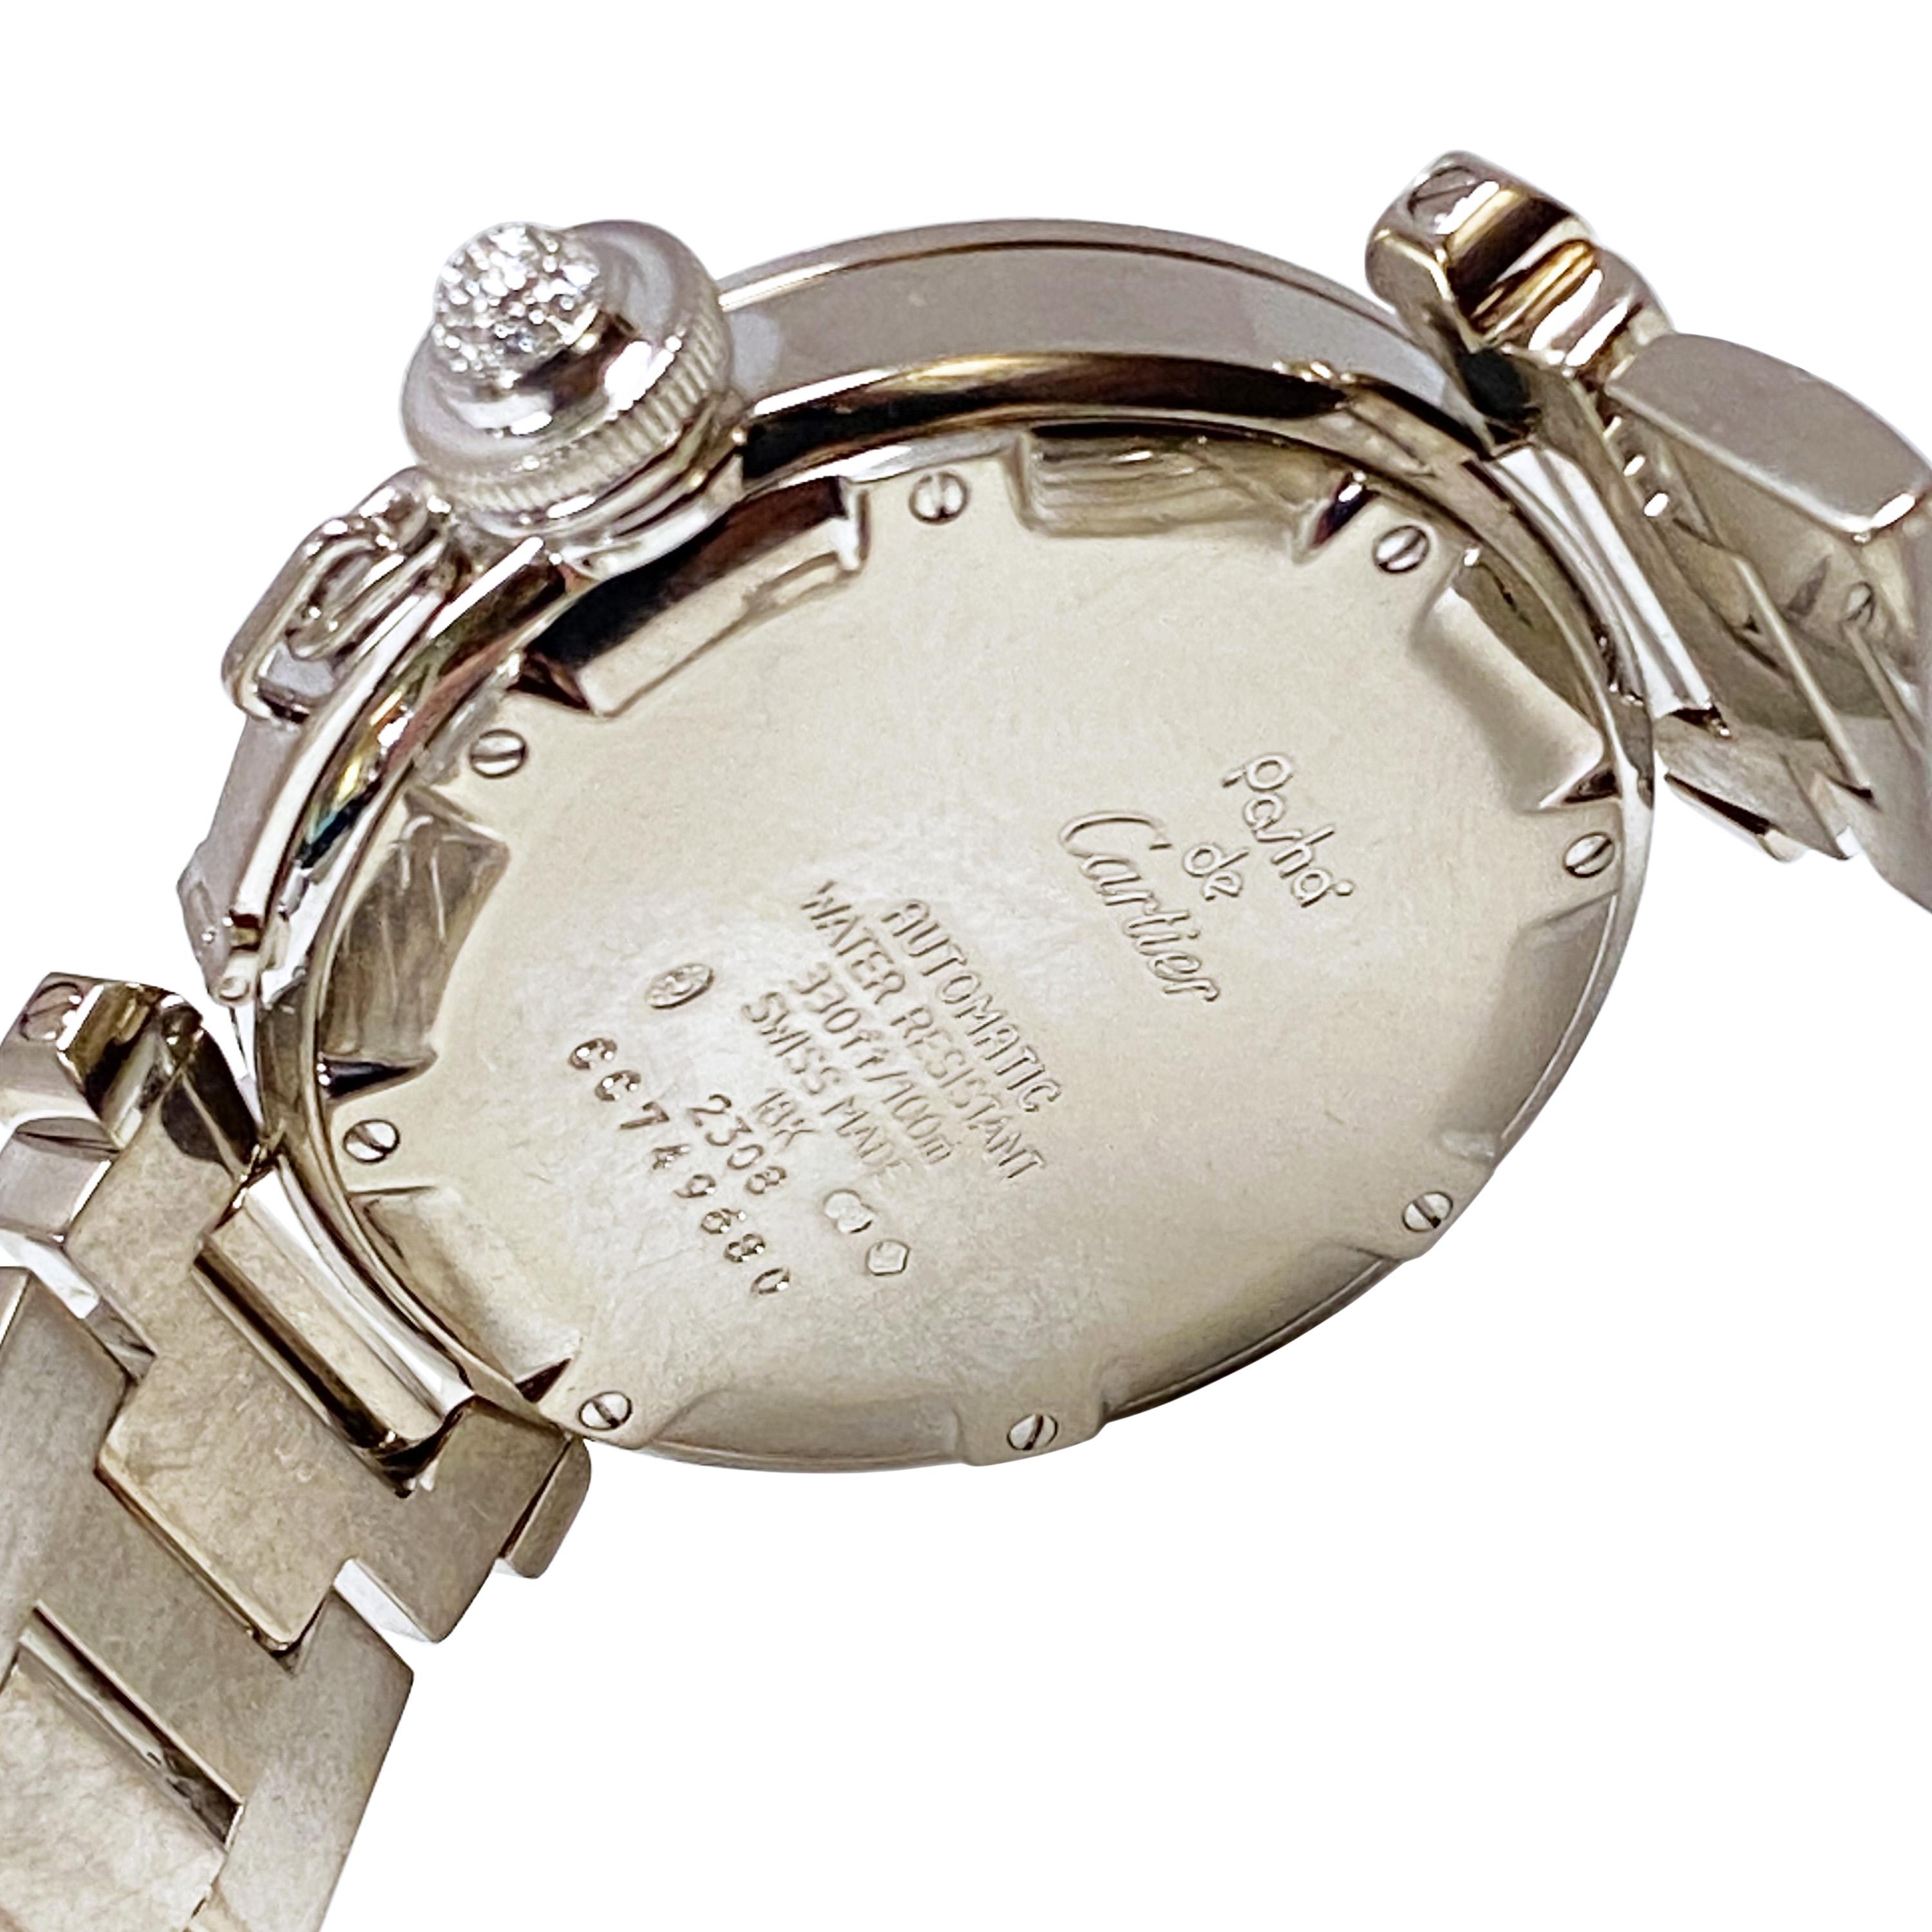 Round Cut Cartier Pasha White Gold and Diamonds Automatic Wristwatch